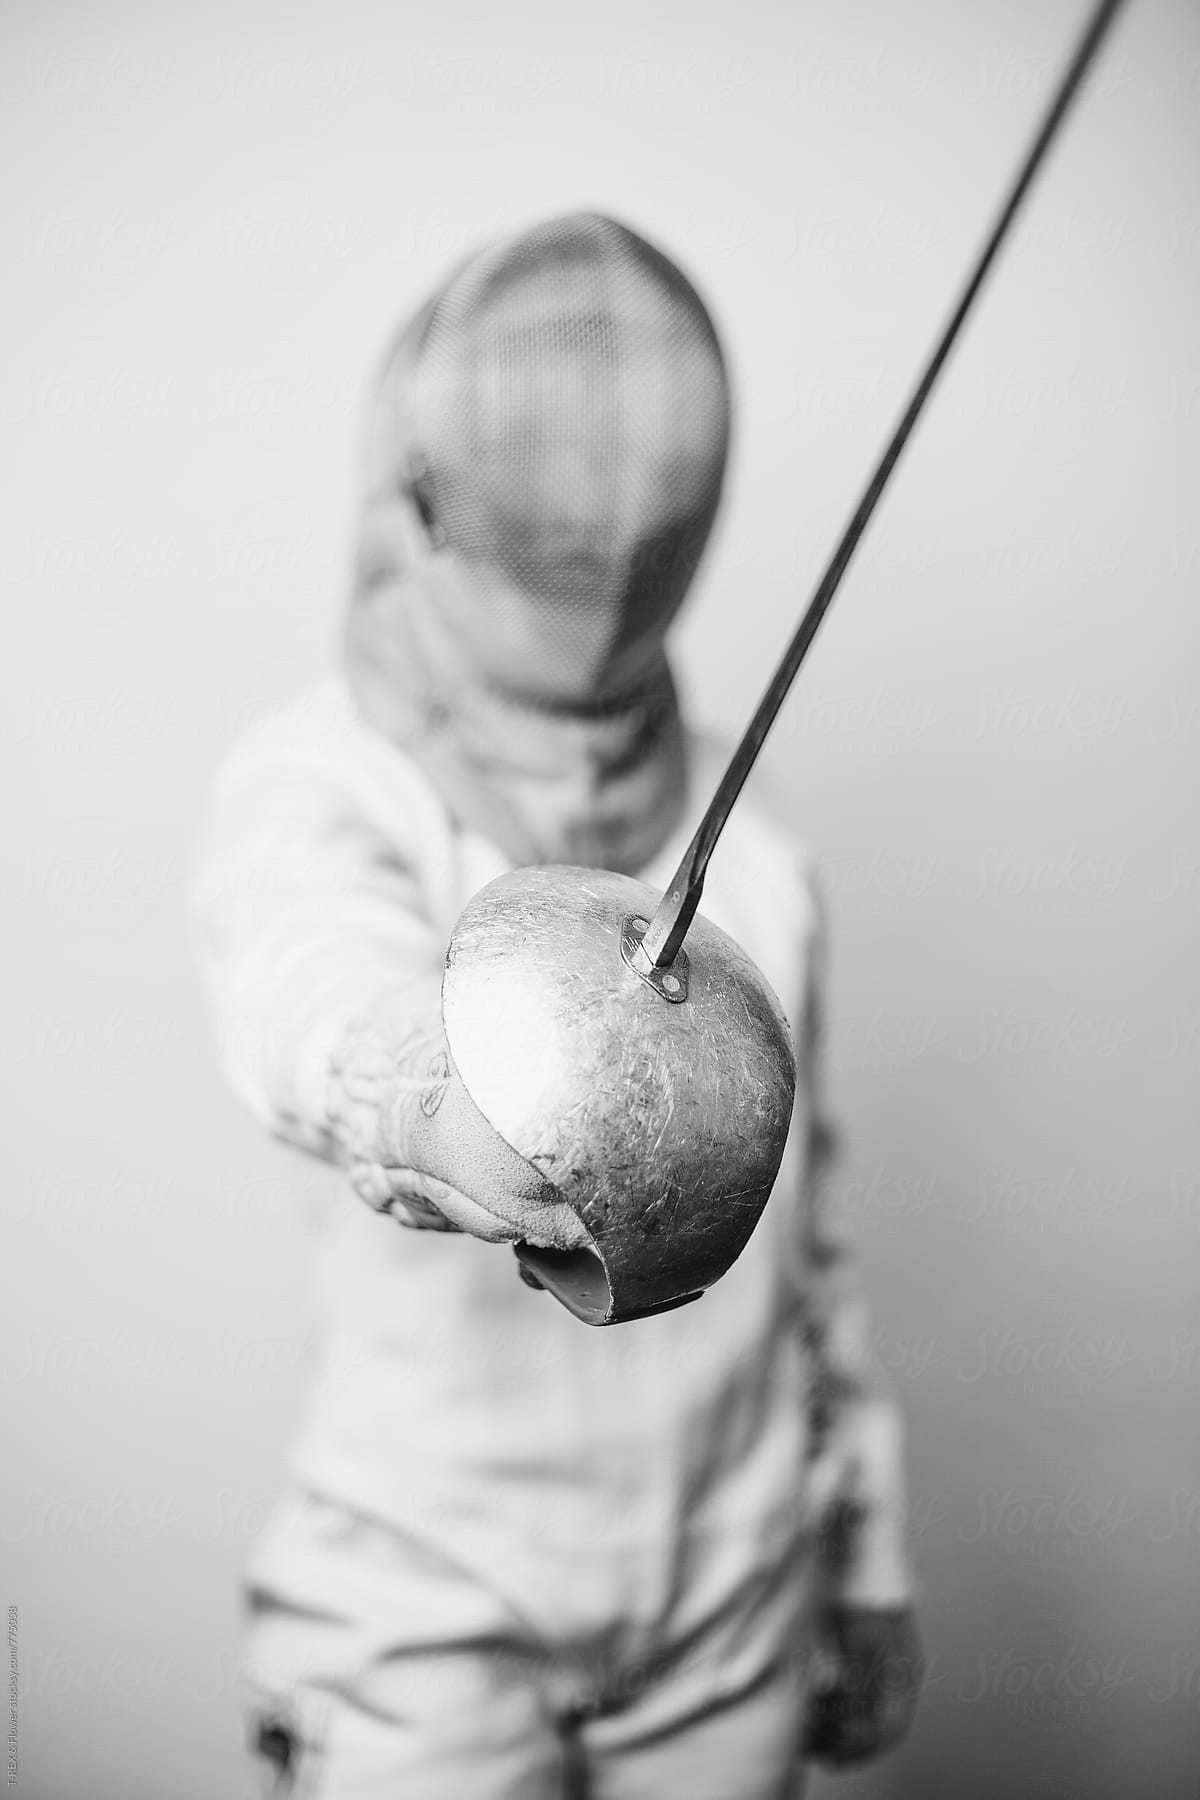 Professional fencing athlete holding sabre